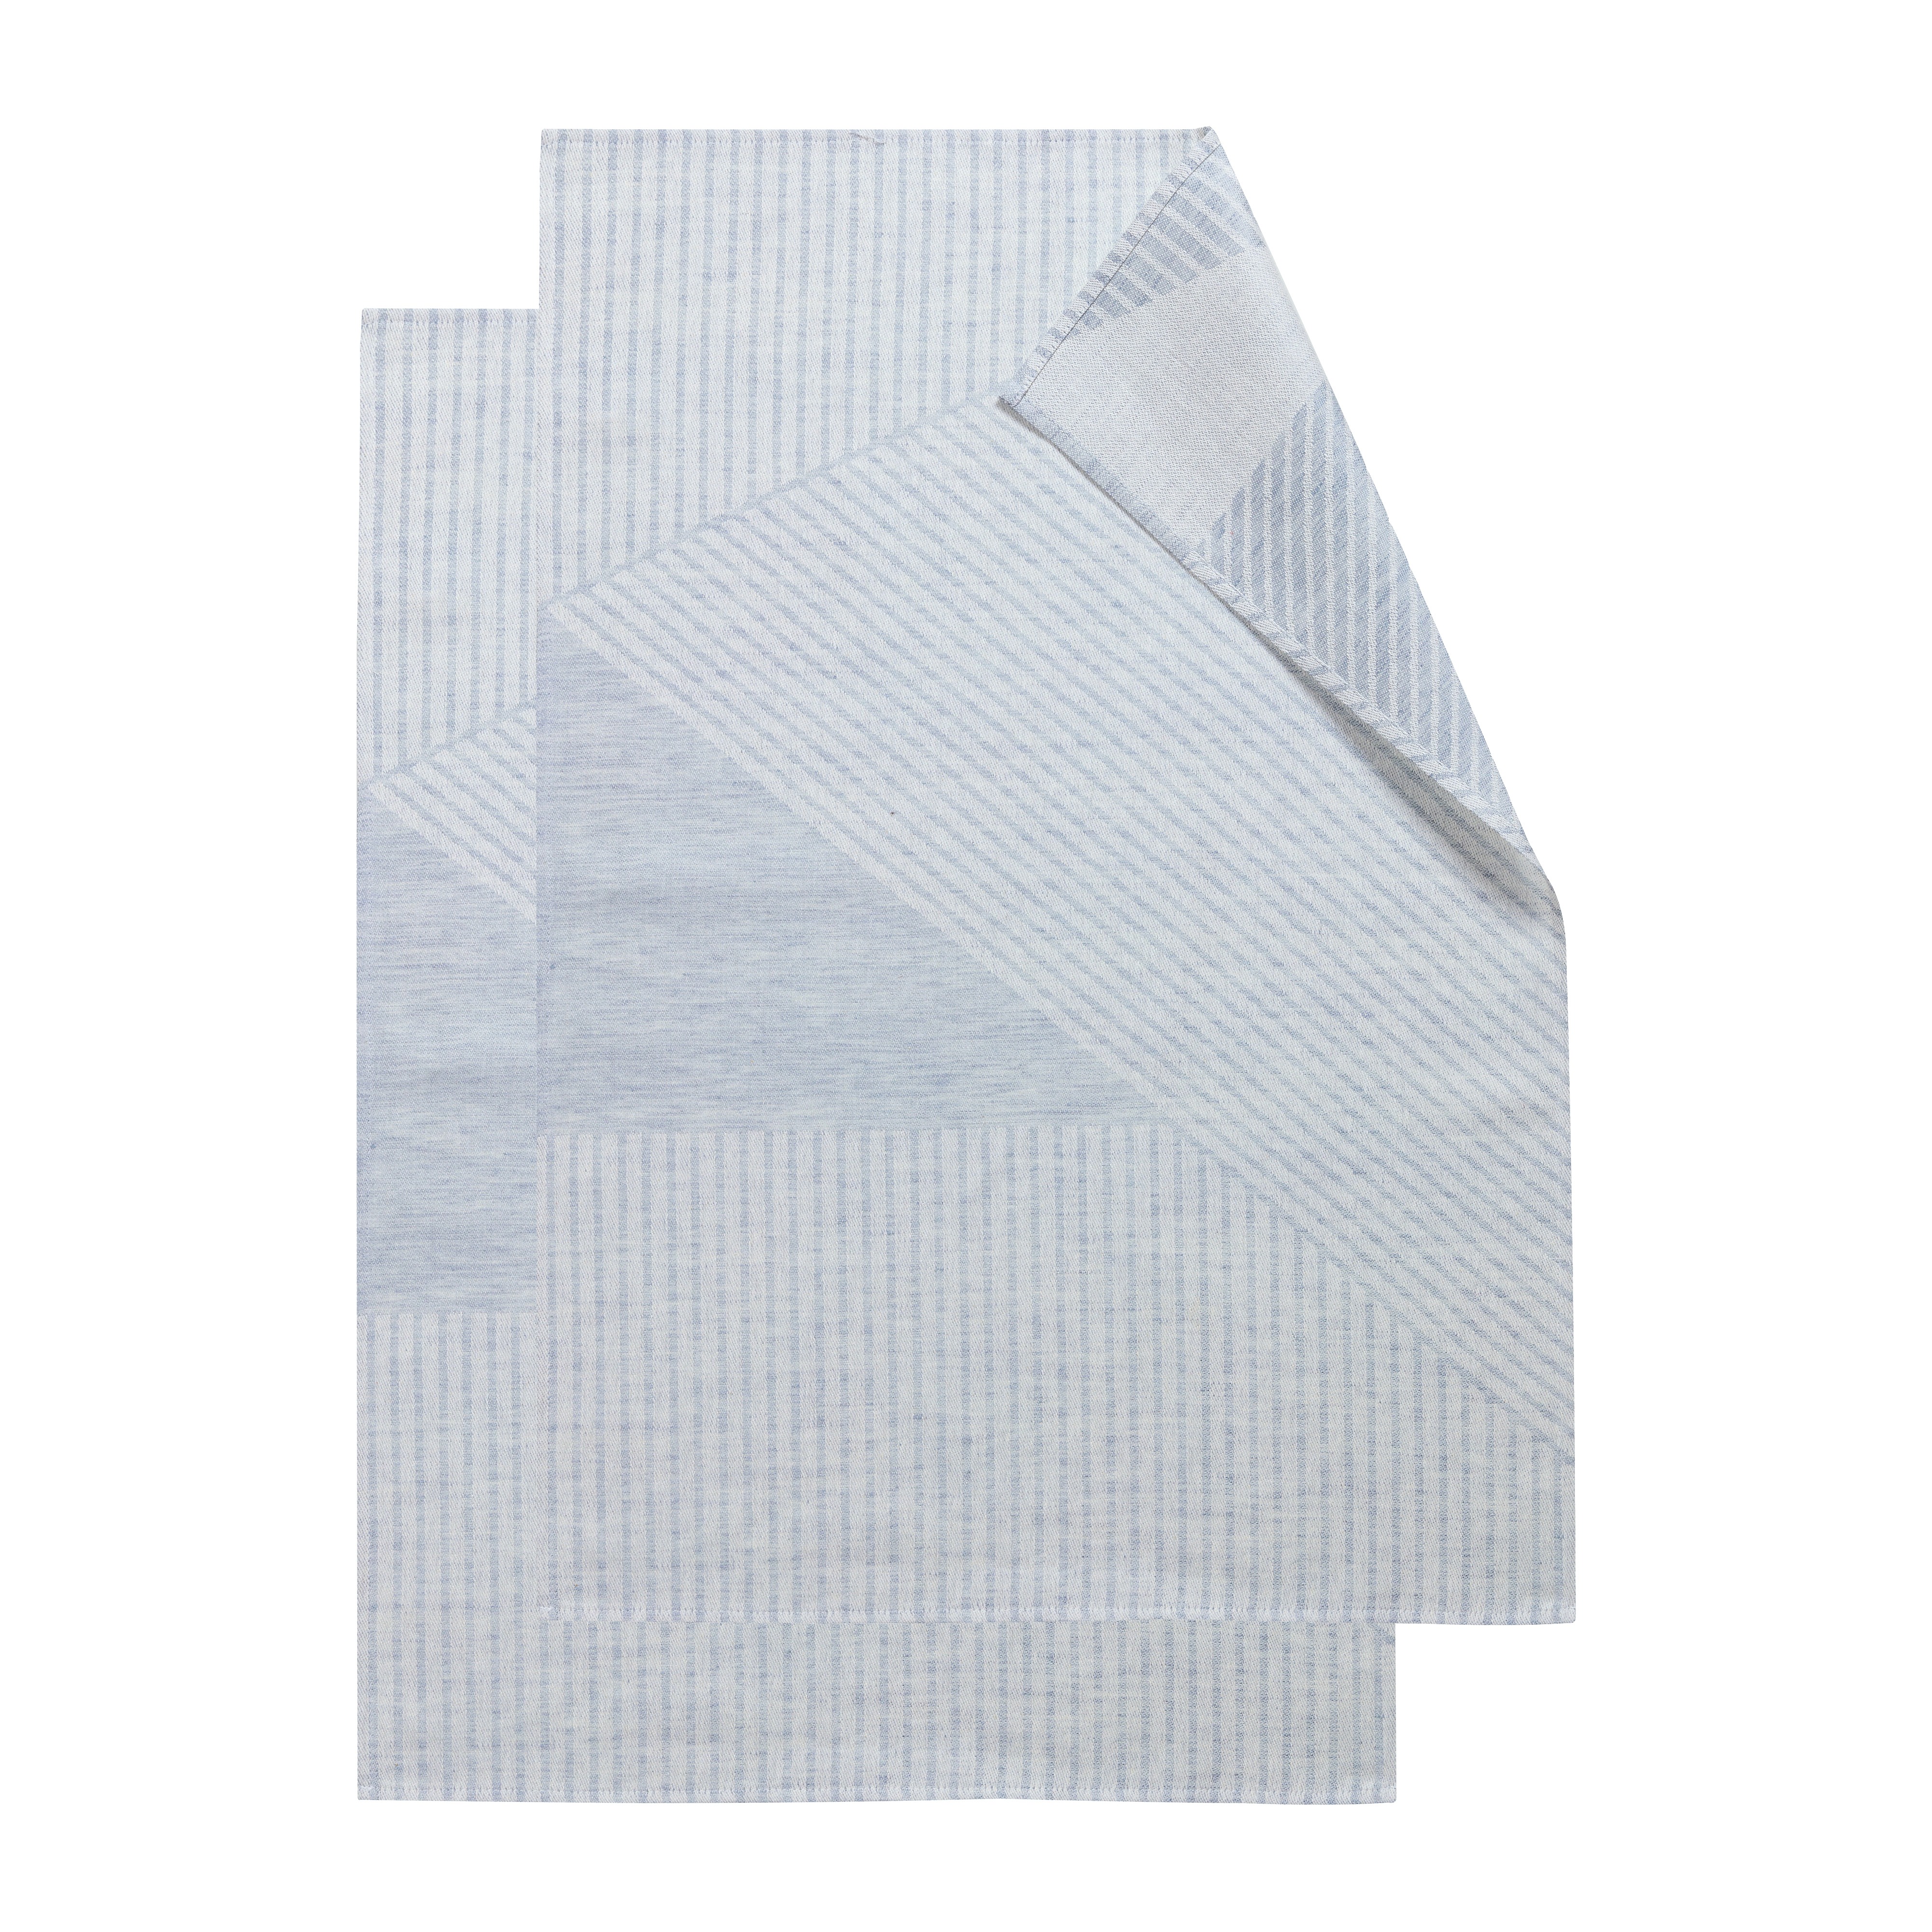 https://www.nordicnest.com/assets/blobs/njrd-stripes-kitchen-towel-47x70-cm-2-pack-blue-white/503115-01_1_ProductImageMain-eae7b0be49.jpg